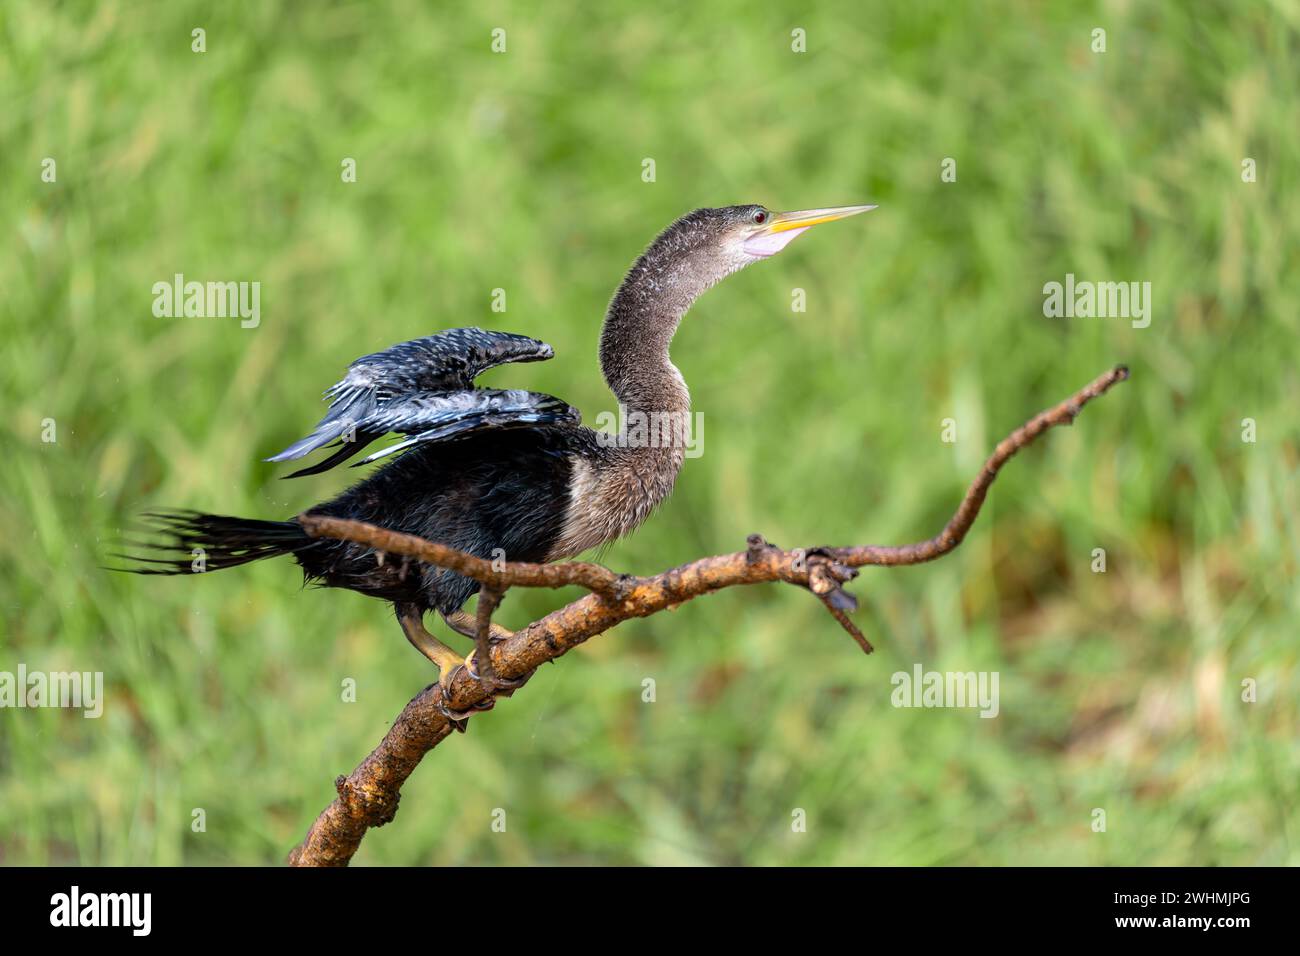 Snakebird, darter, American darter, or water turkey, Anhinga anhinga, Costa Rica Stock Photo